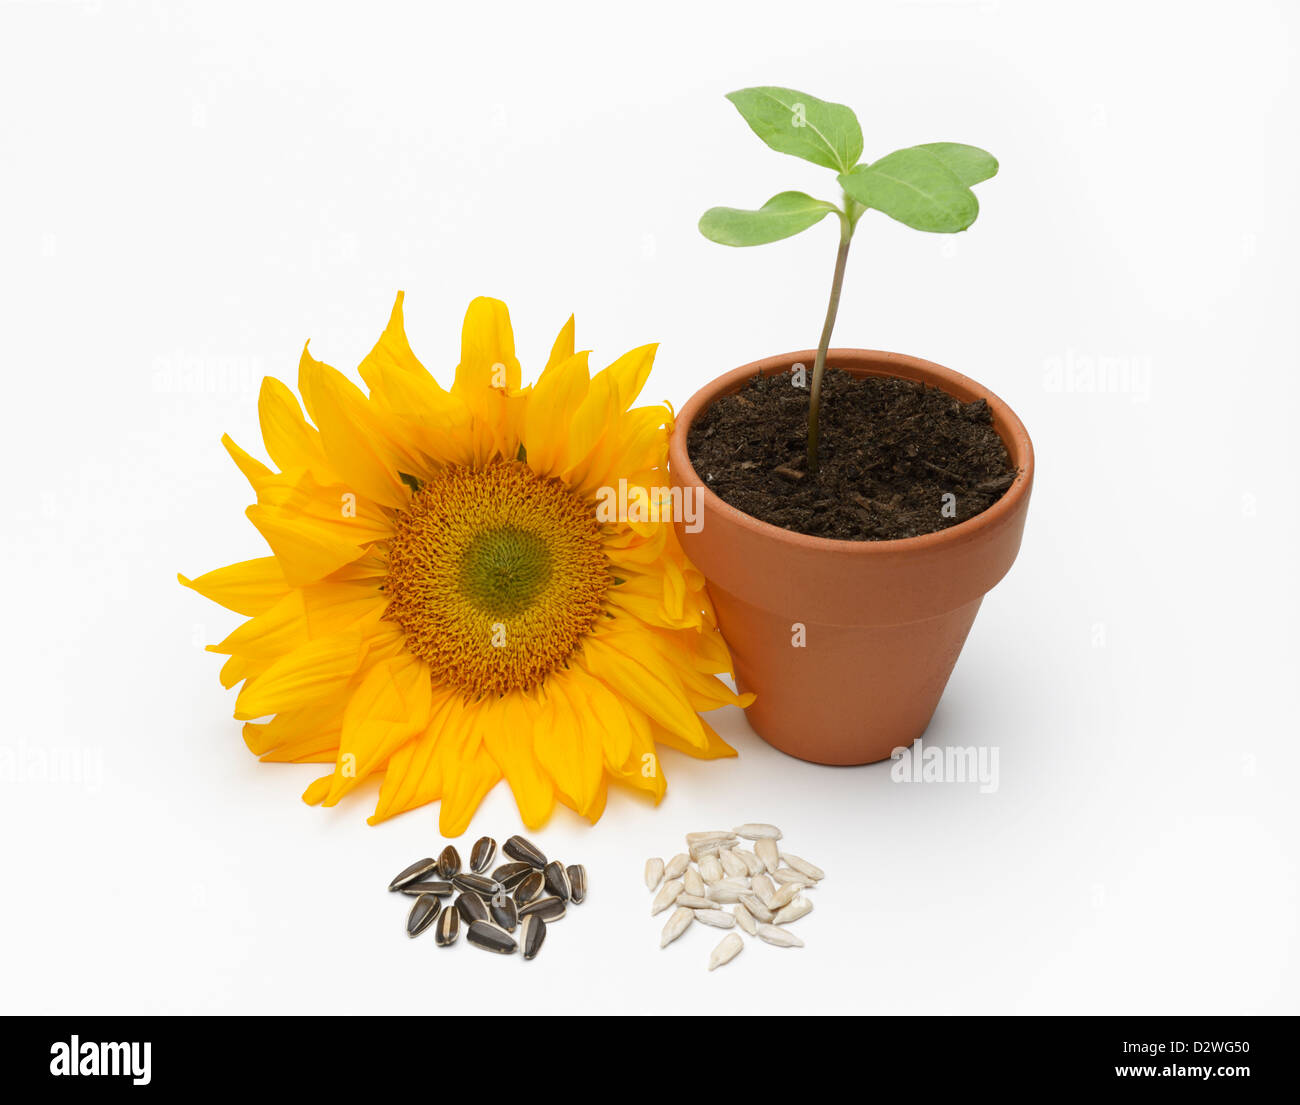 Sunflower, Helianthus annuus Stock Photo